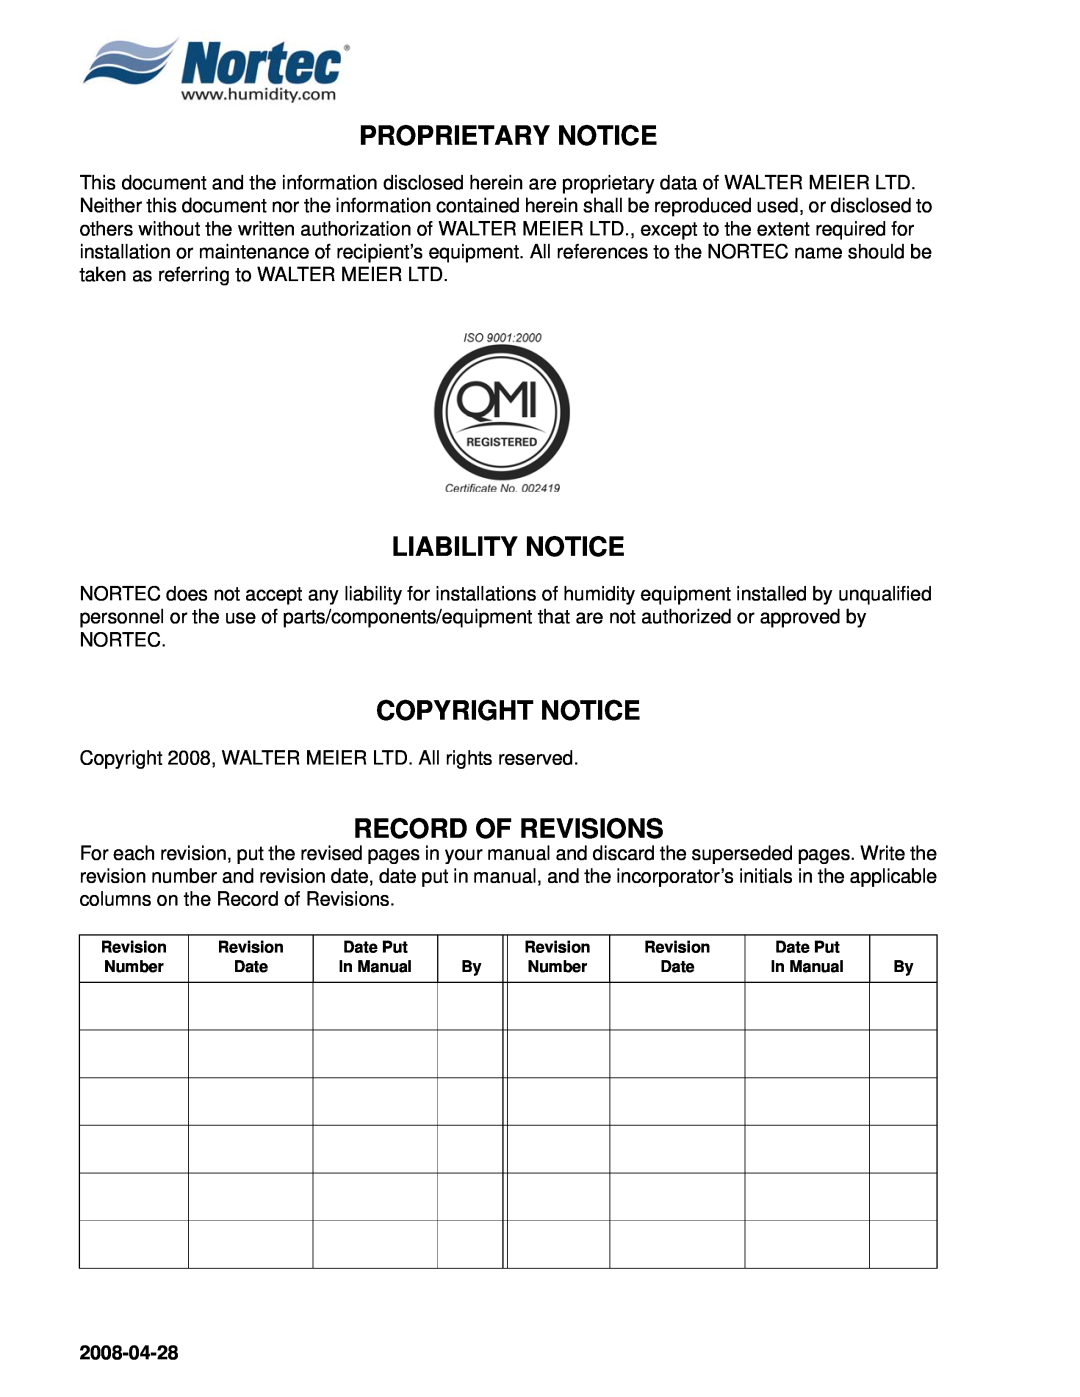 Nortec 380V installation manual Proprietary Notice, Liability Notice, Copyright Notice, Record Of Revisions, 2008-04-28 